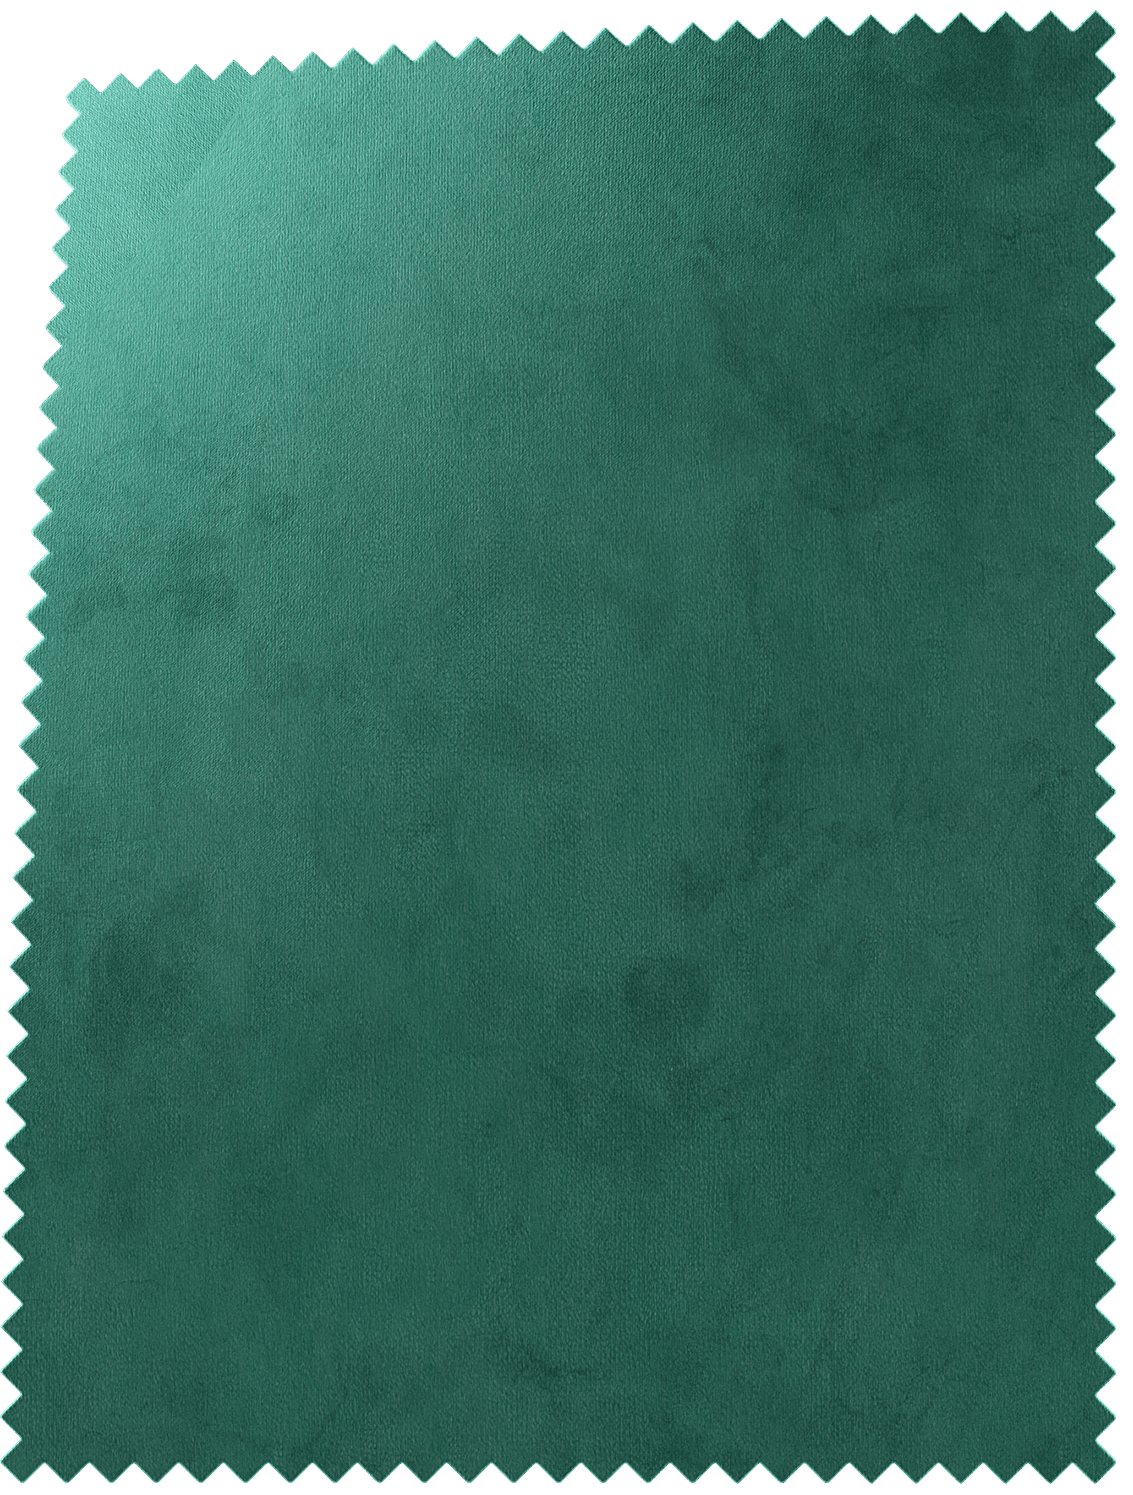 Velvet Emerald Green Swatch